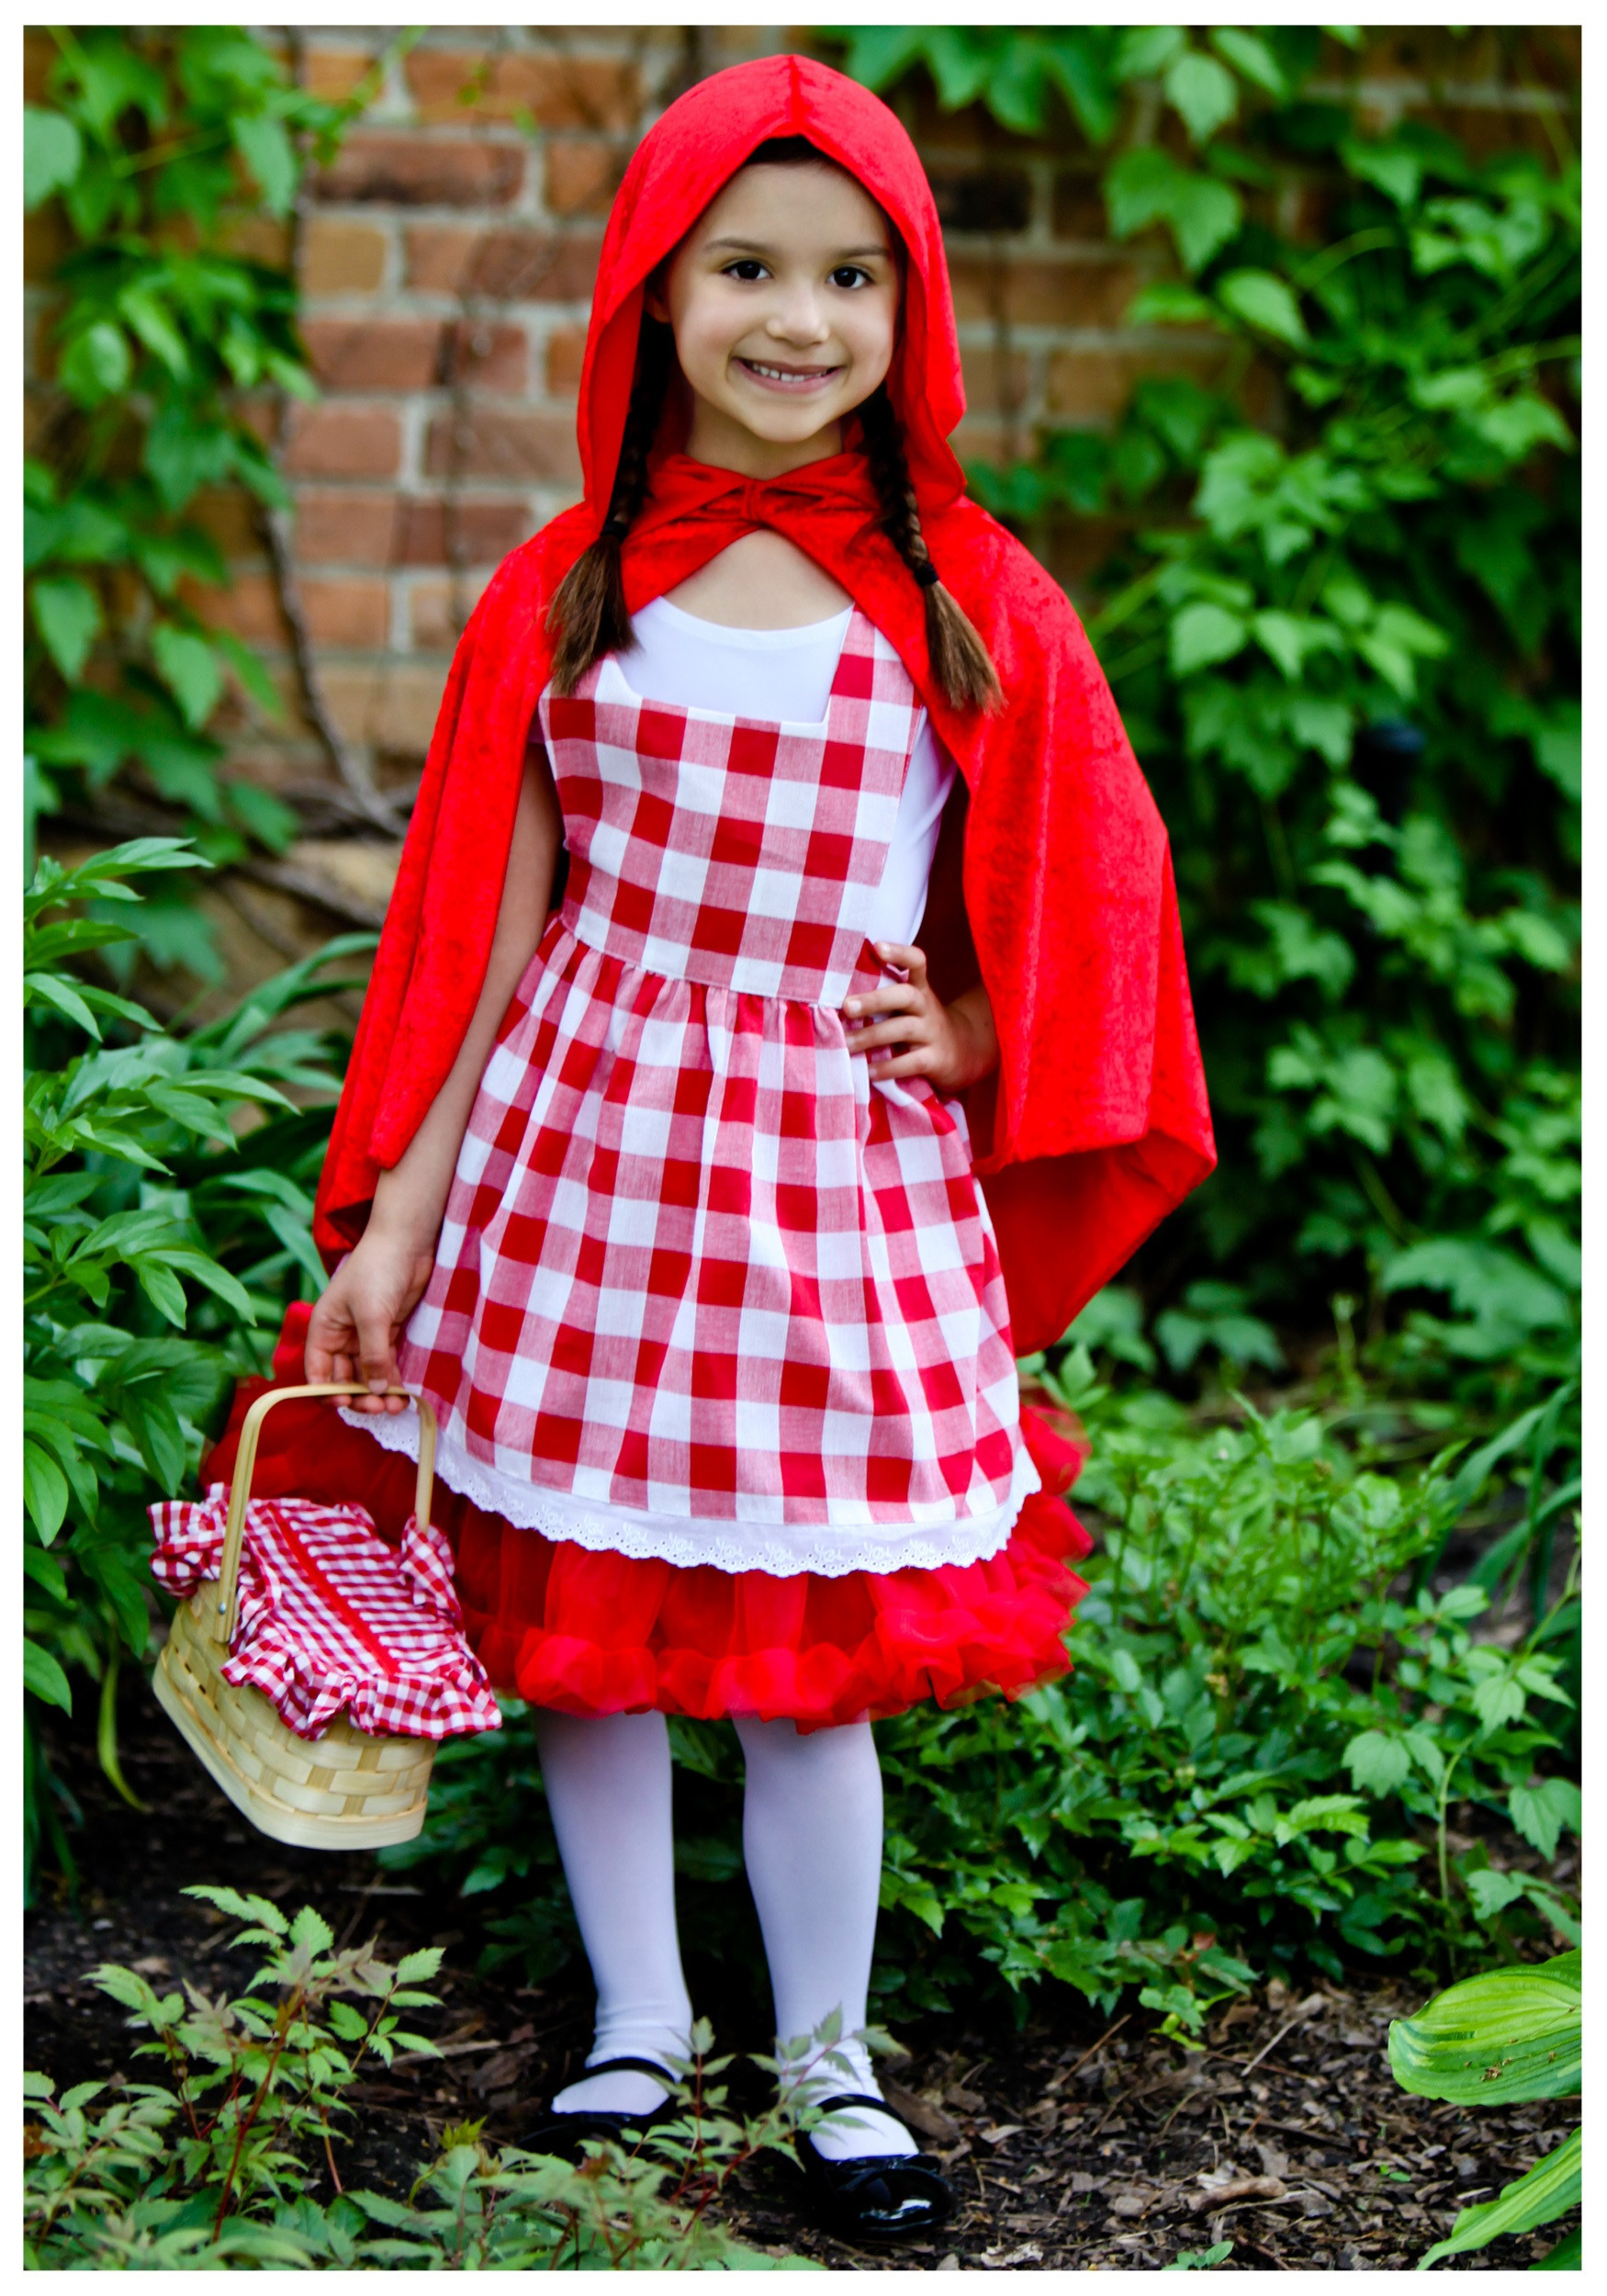 Red Riding Hood DIY Costume
 Kids Red Riding Hood Tutu Costume